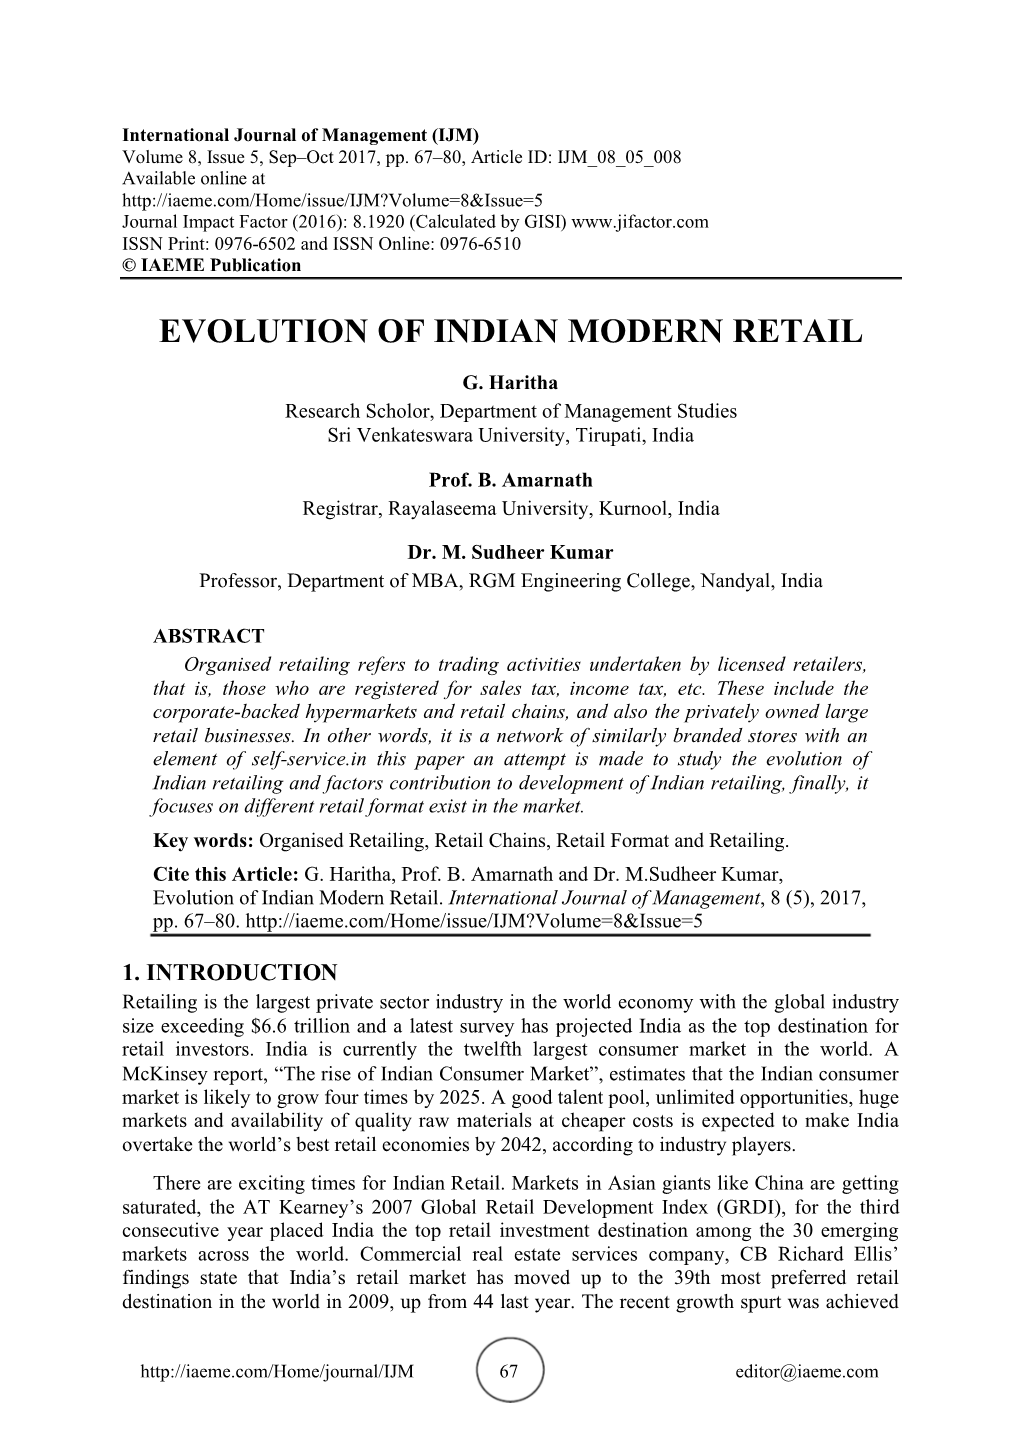 Evolution of Indian Modern Retail